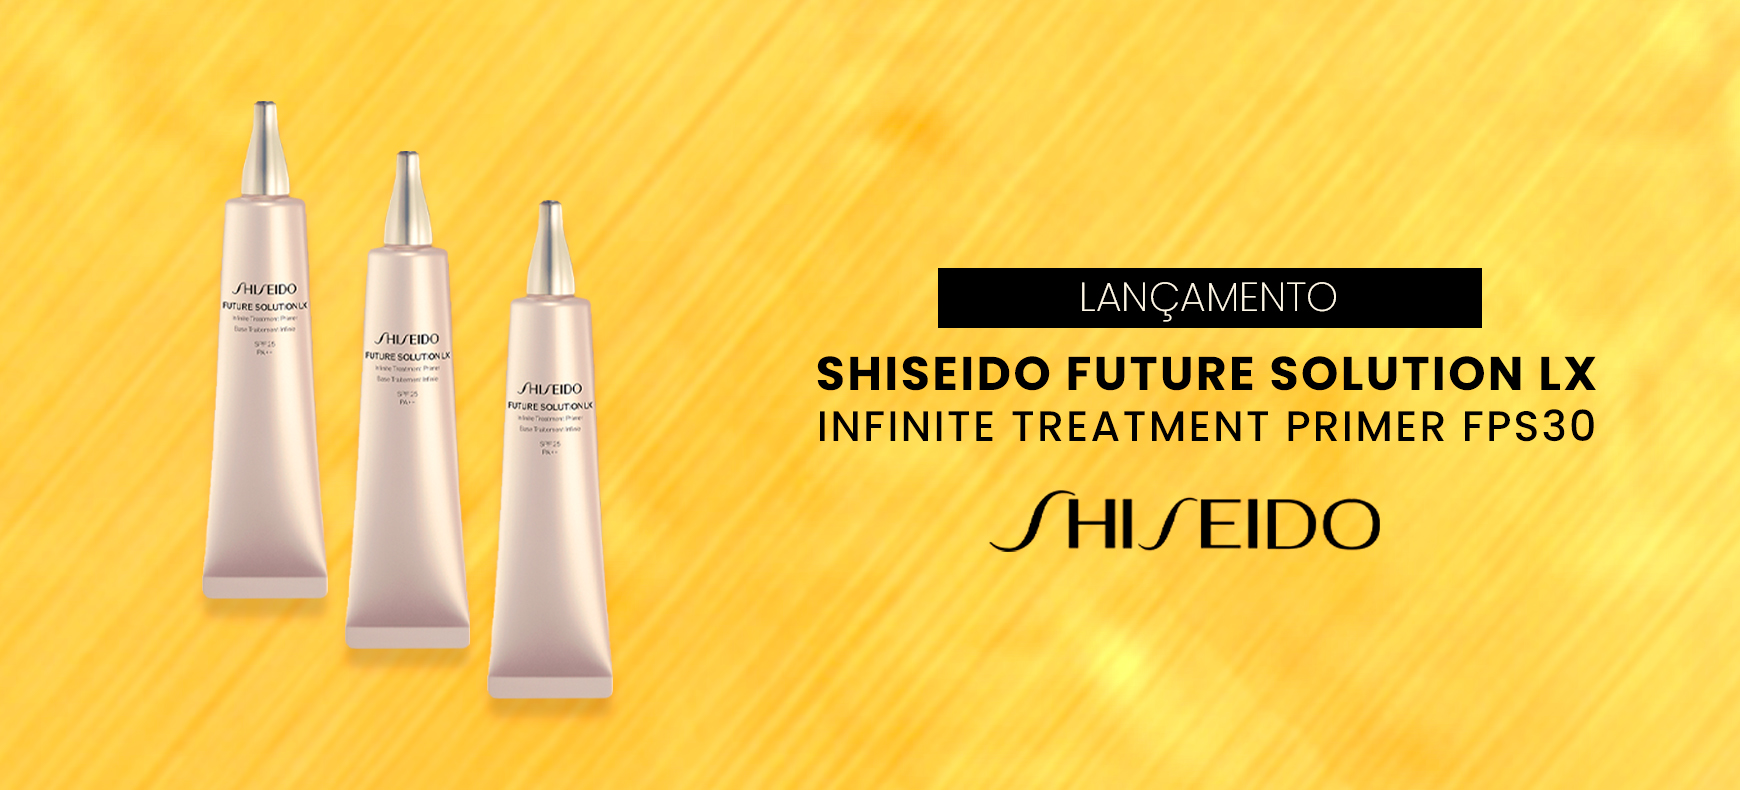 shiseido-future-solution-lx-banner-categoria